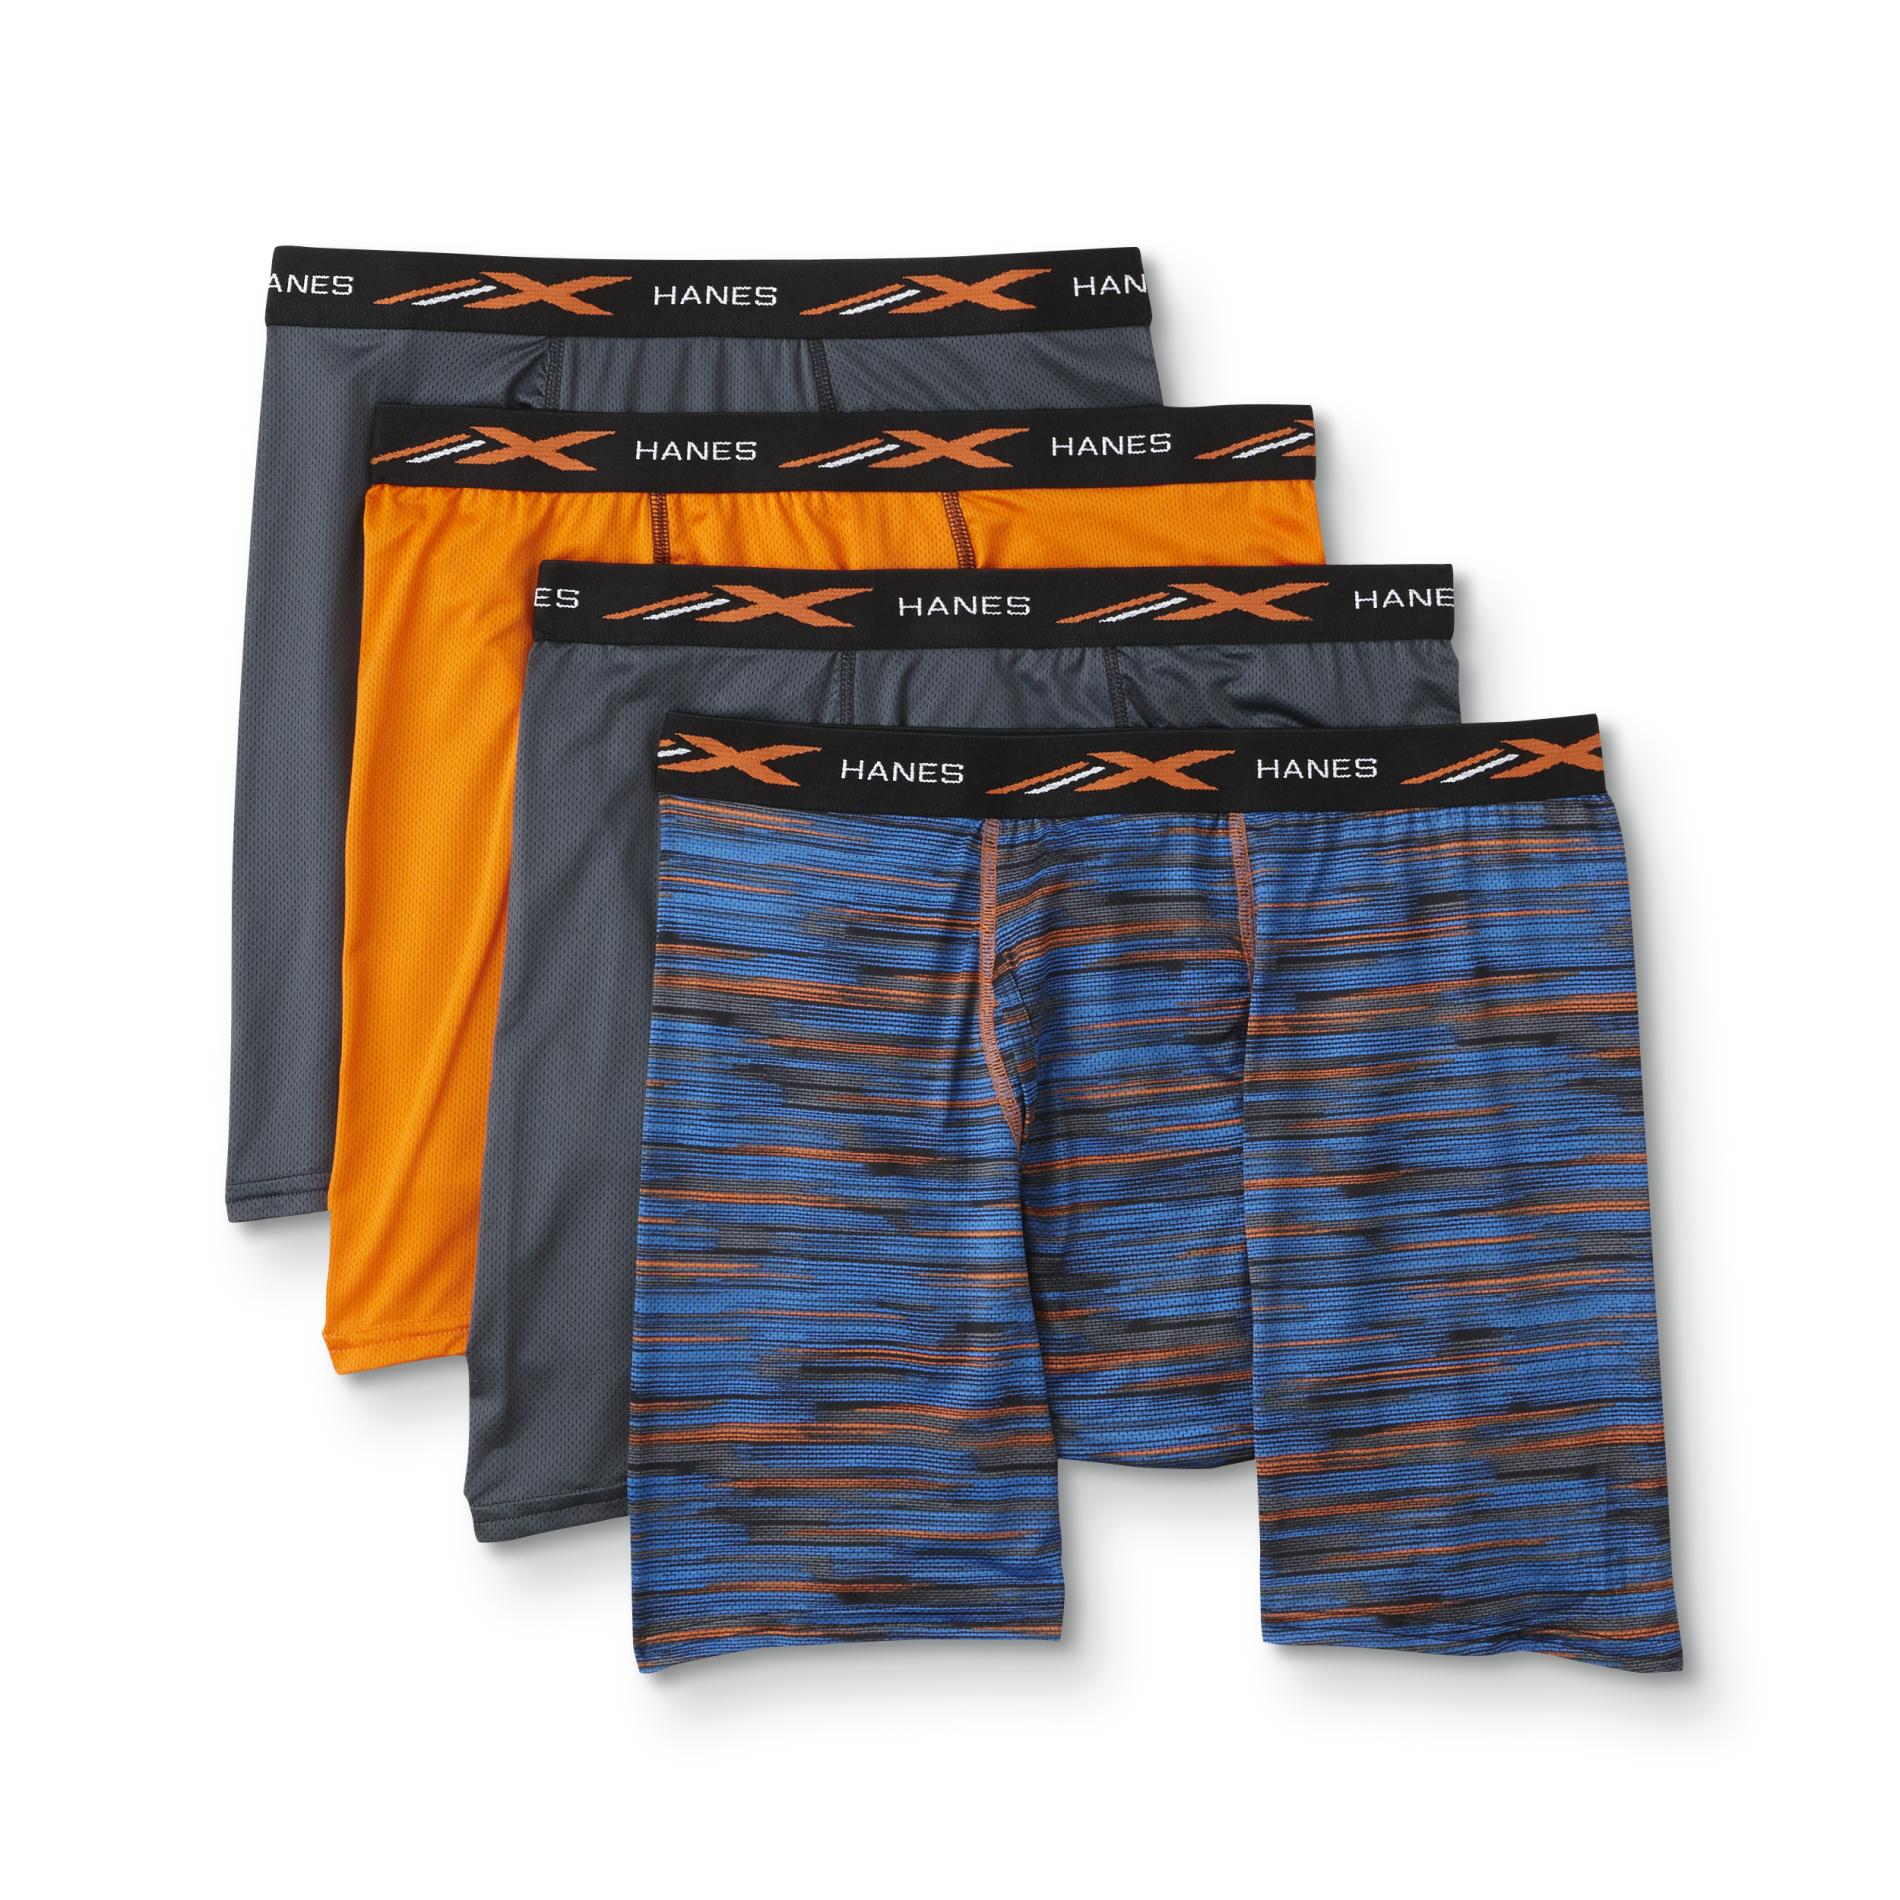 Hanes Men's 4-Pack Mesh Boxer Briefs - Solid & Striped